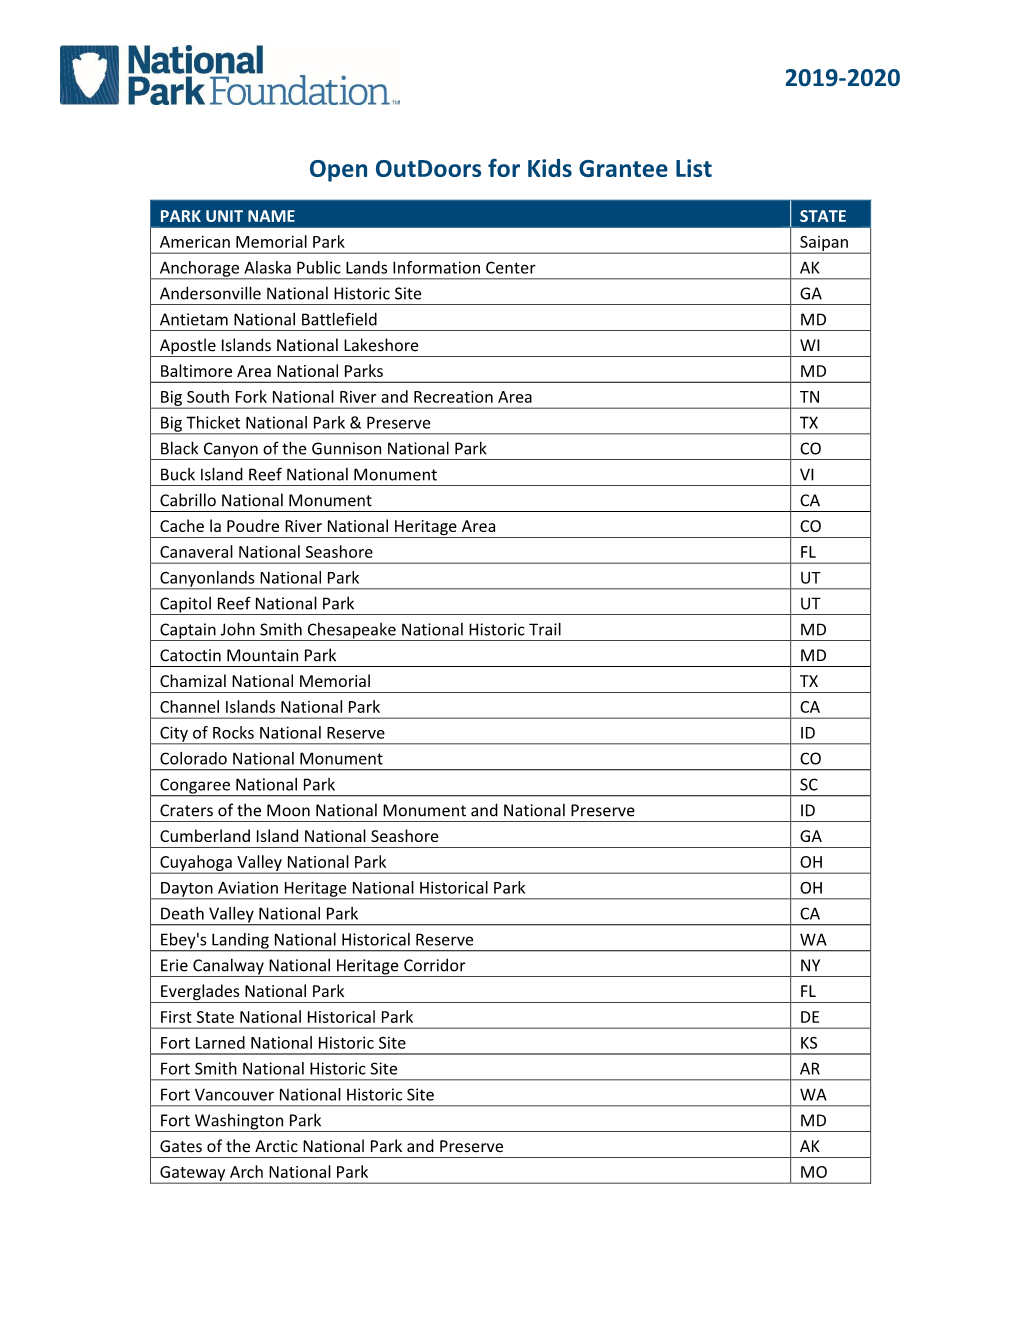 2019-2020 Open Outdoors for Kids Grantee List